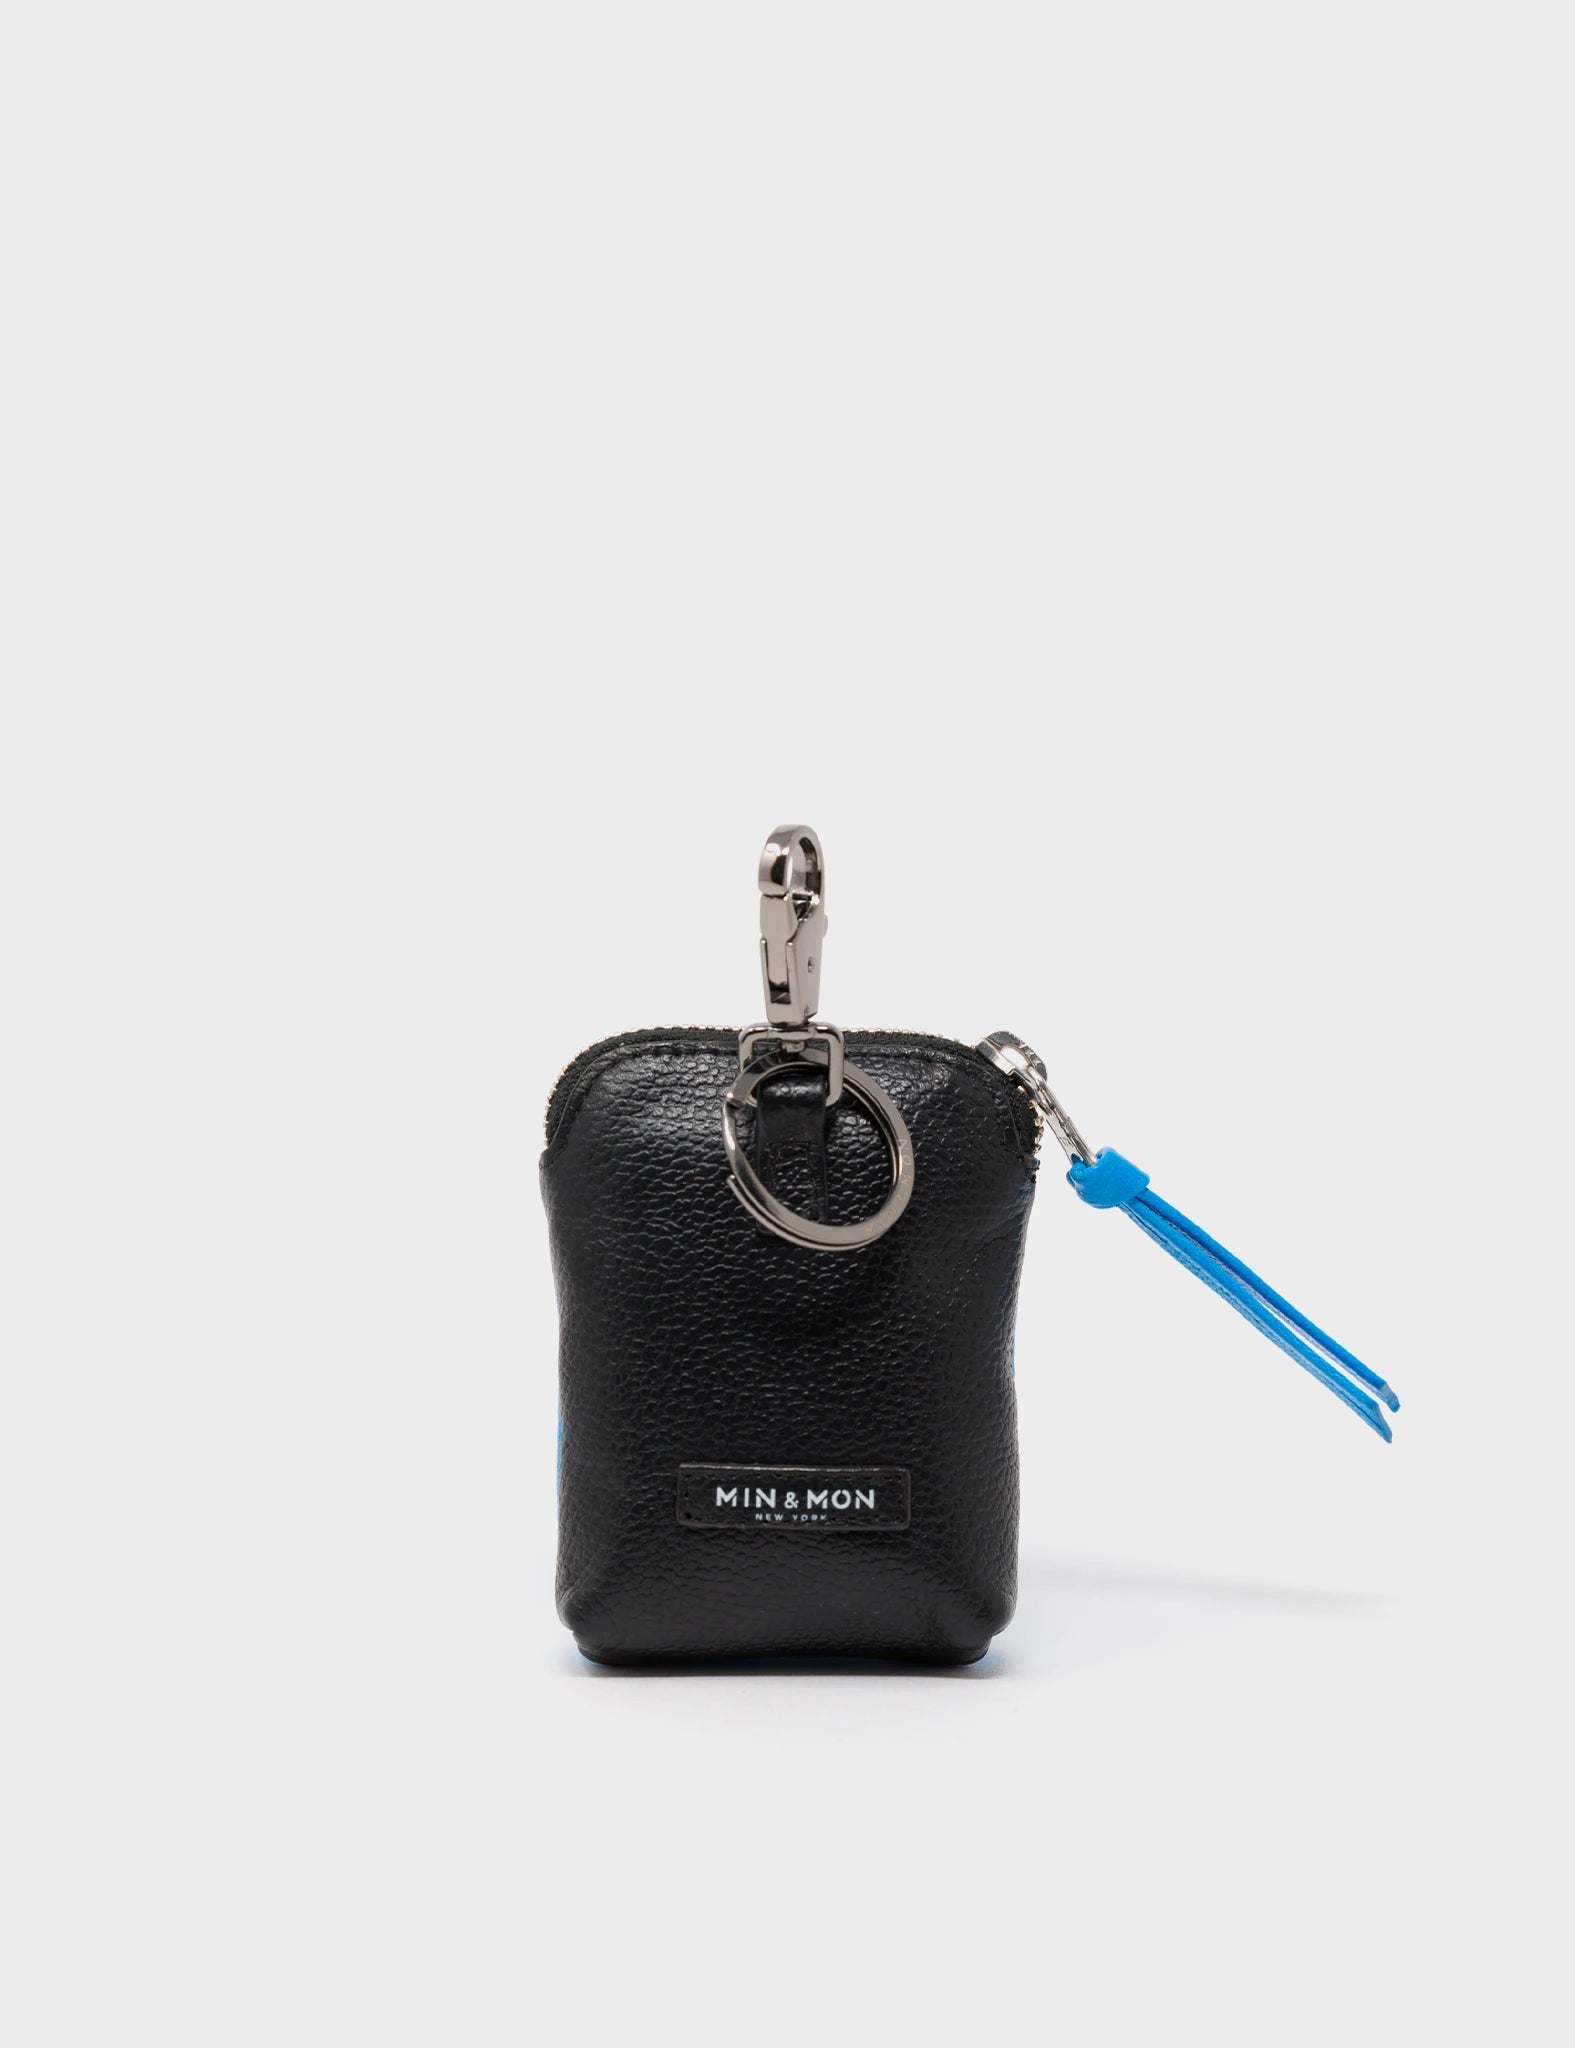 Leather Keychains Leather Bag Charm Mini Tote Keychains 